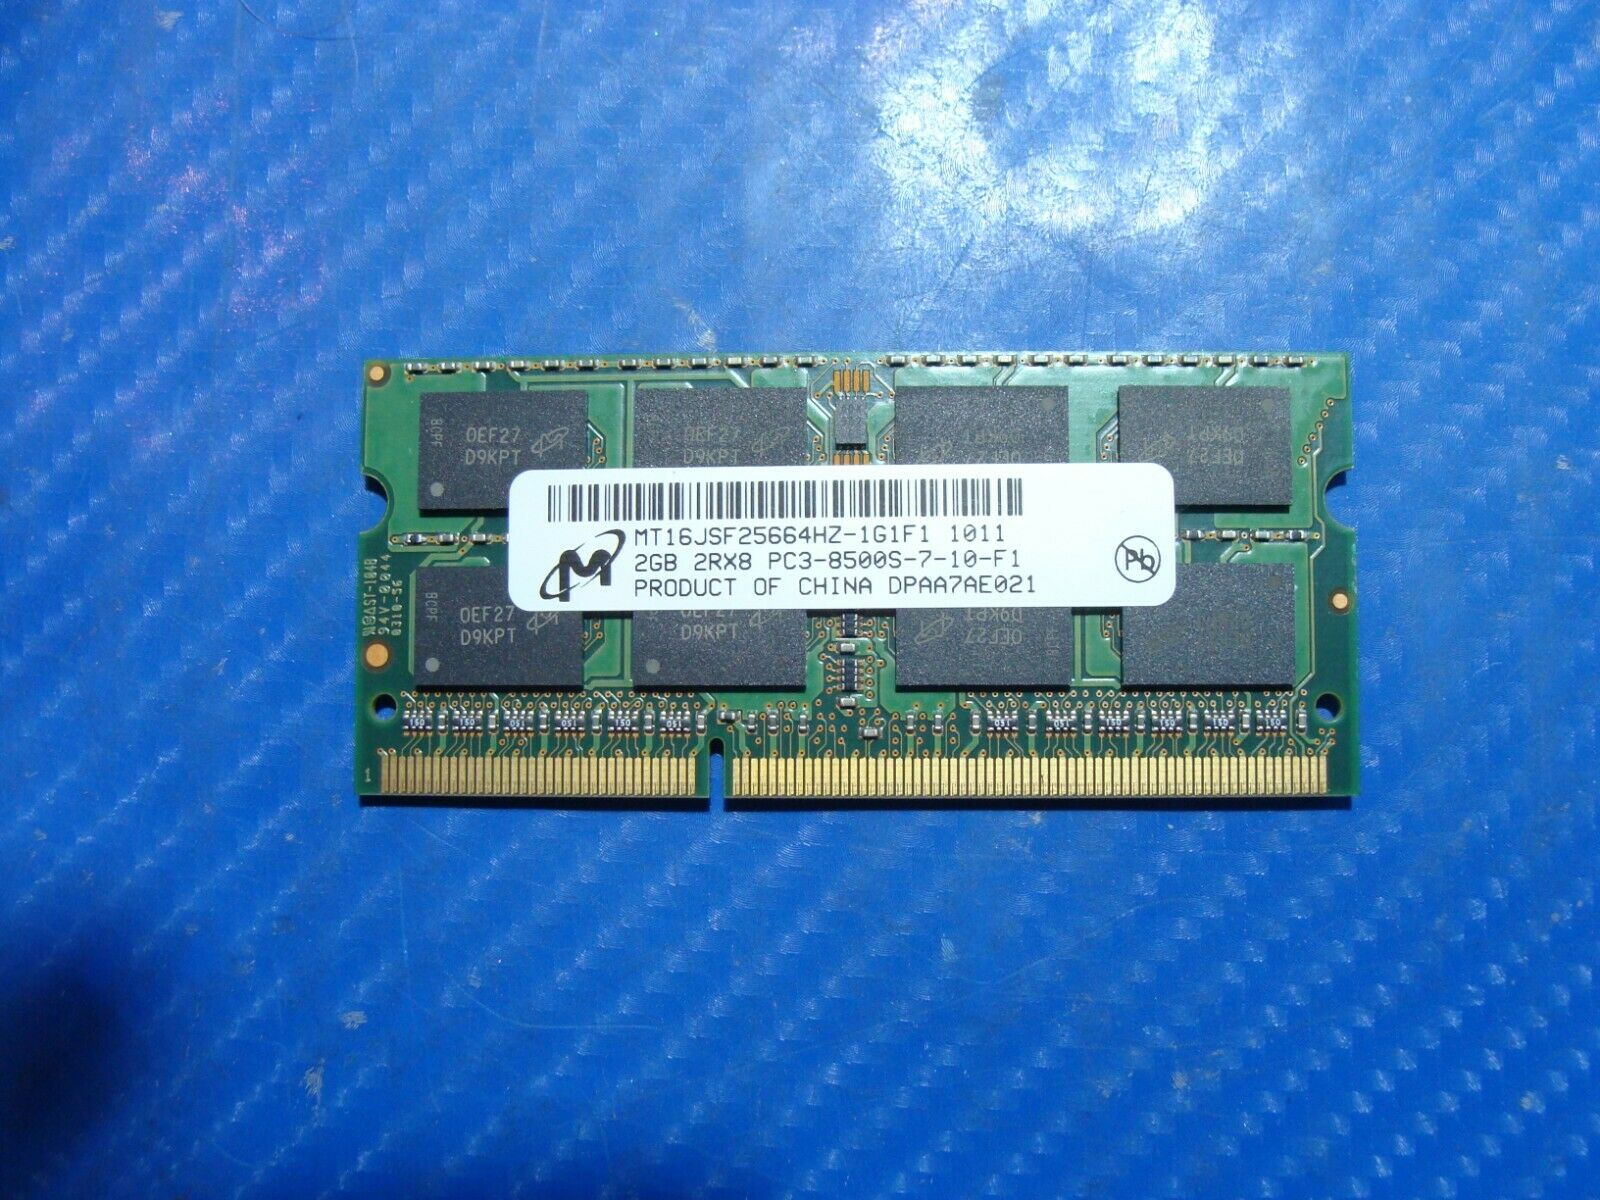 MacBook Pro Micron 2GB 2Rx8 PC3-8500S SO-DIMM Memory RAM MT16JSF25664HZ-1G1F1 #1 Micron